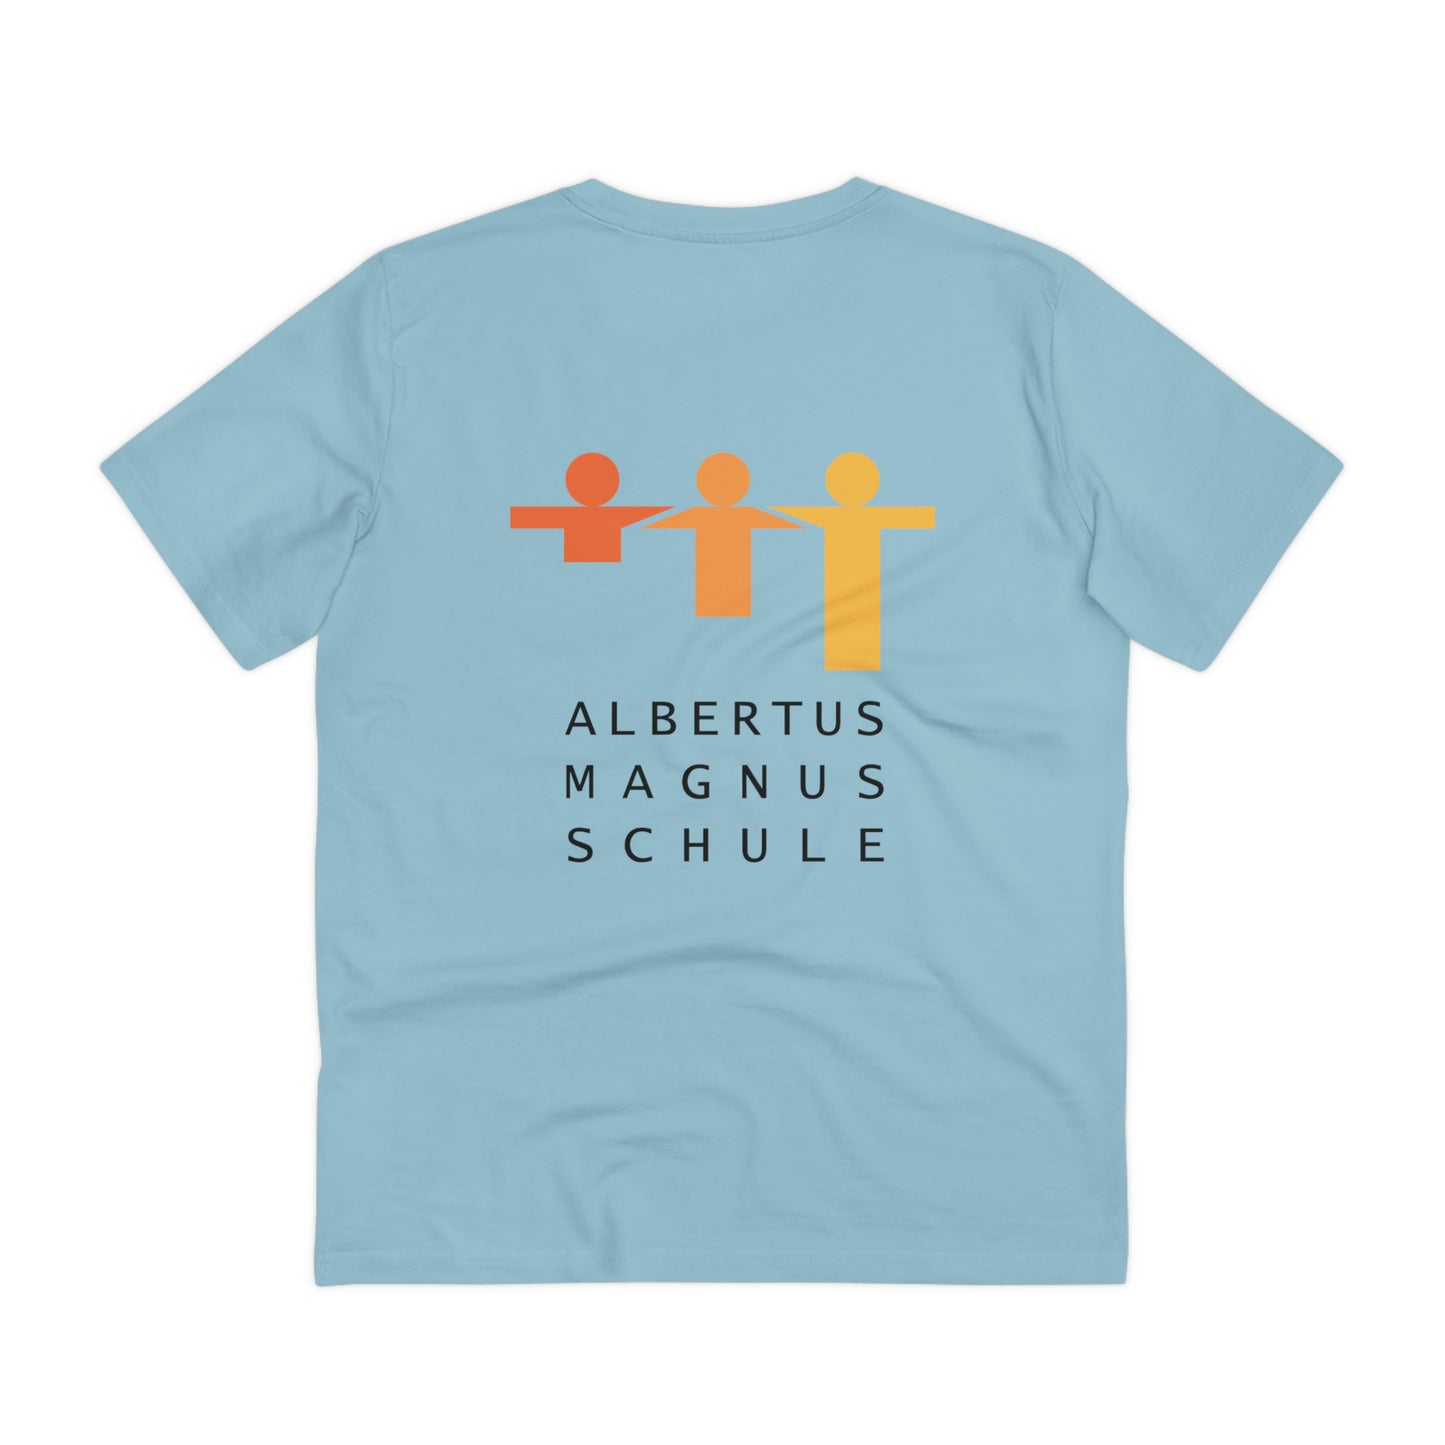 Albertus Magnus Schule Organic Eco-Friendly T-shirt